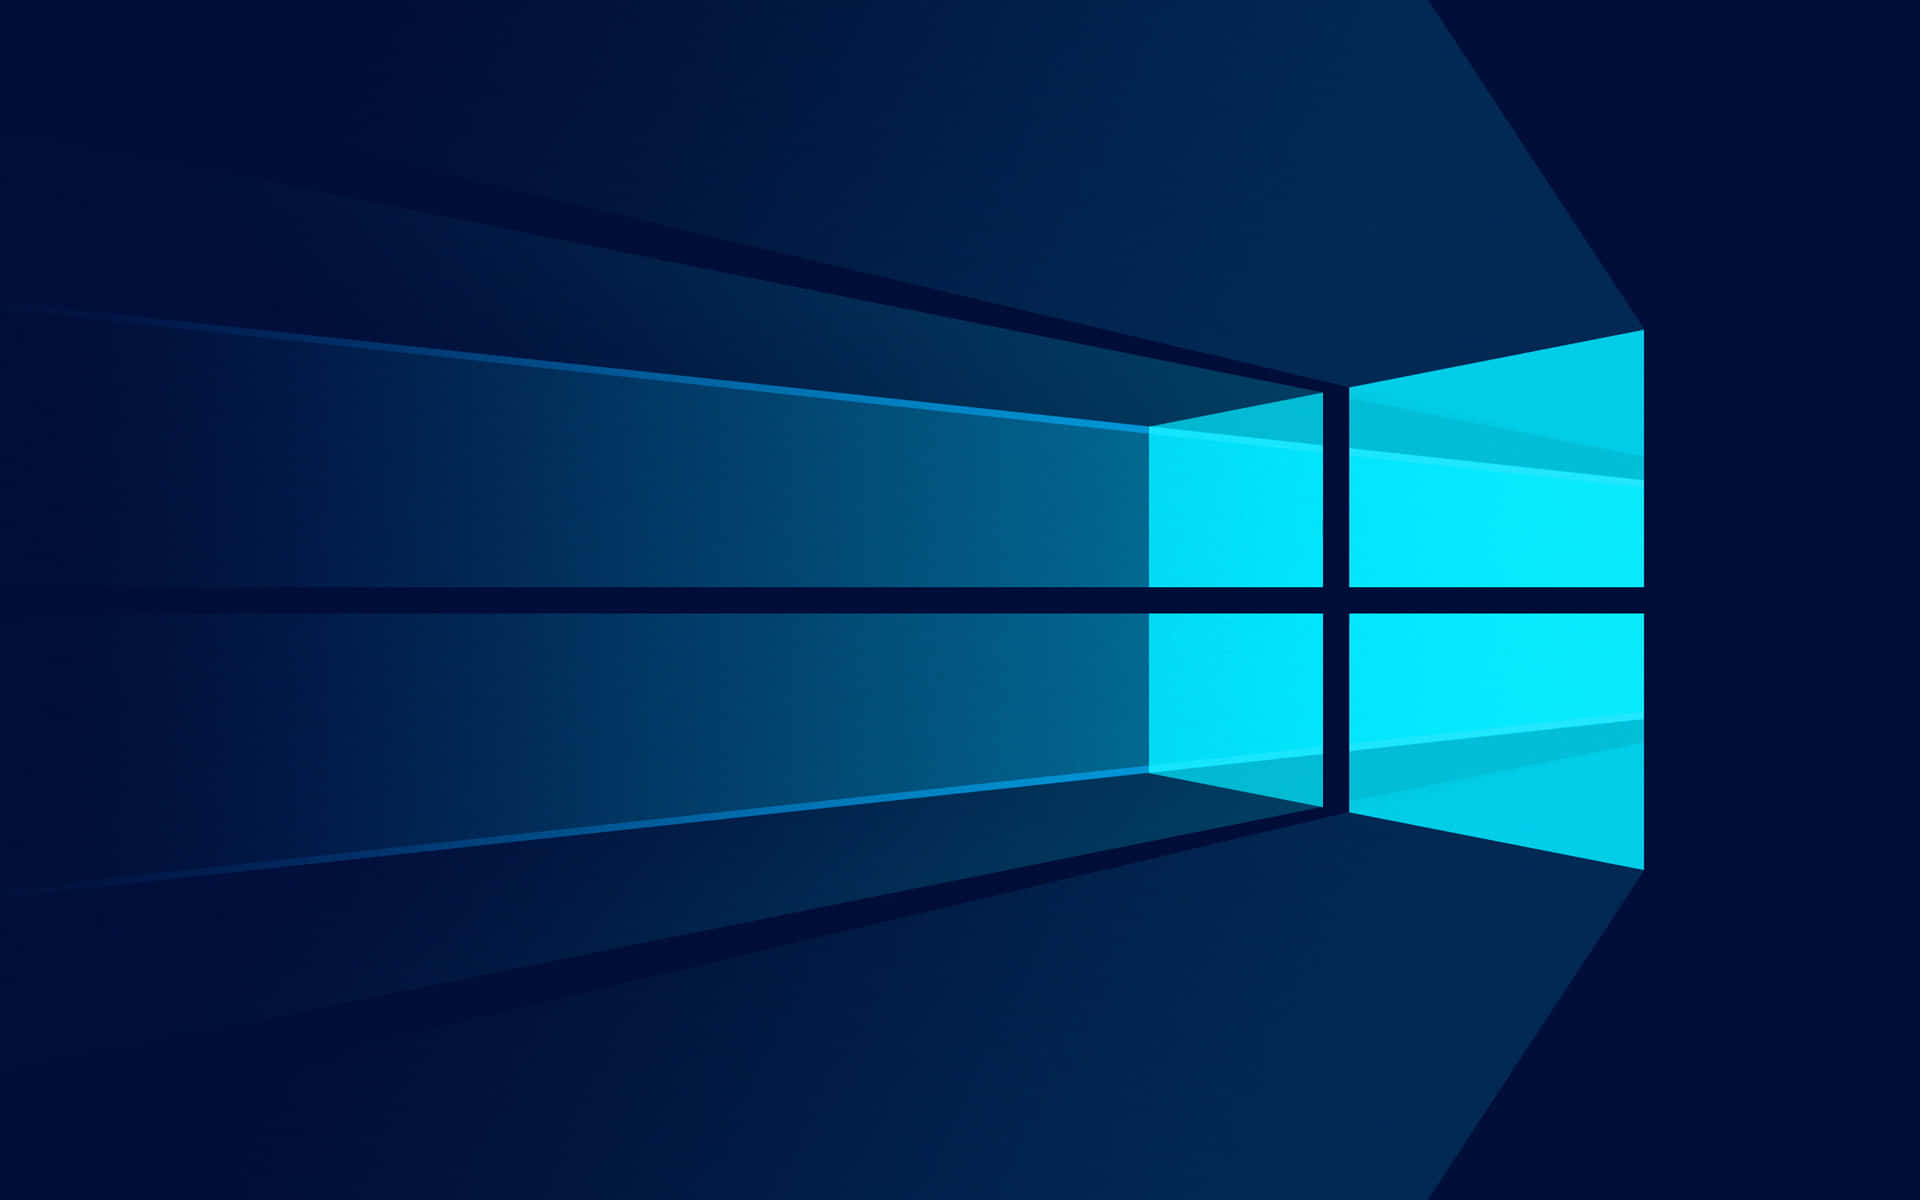 Enjoy stunning visuals with Microsoft's latest operating system, Windows 10.